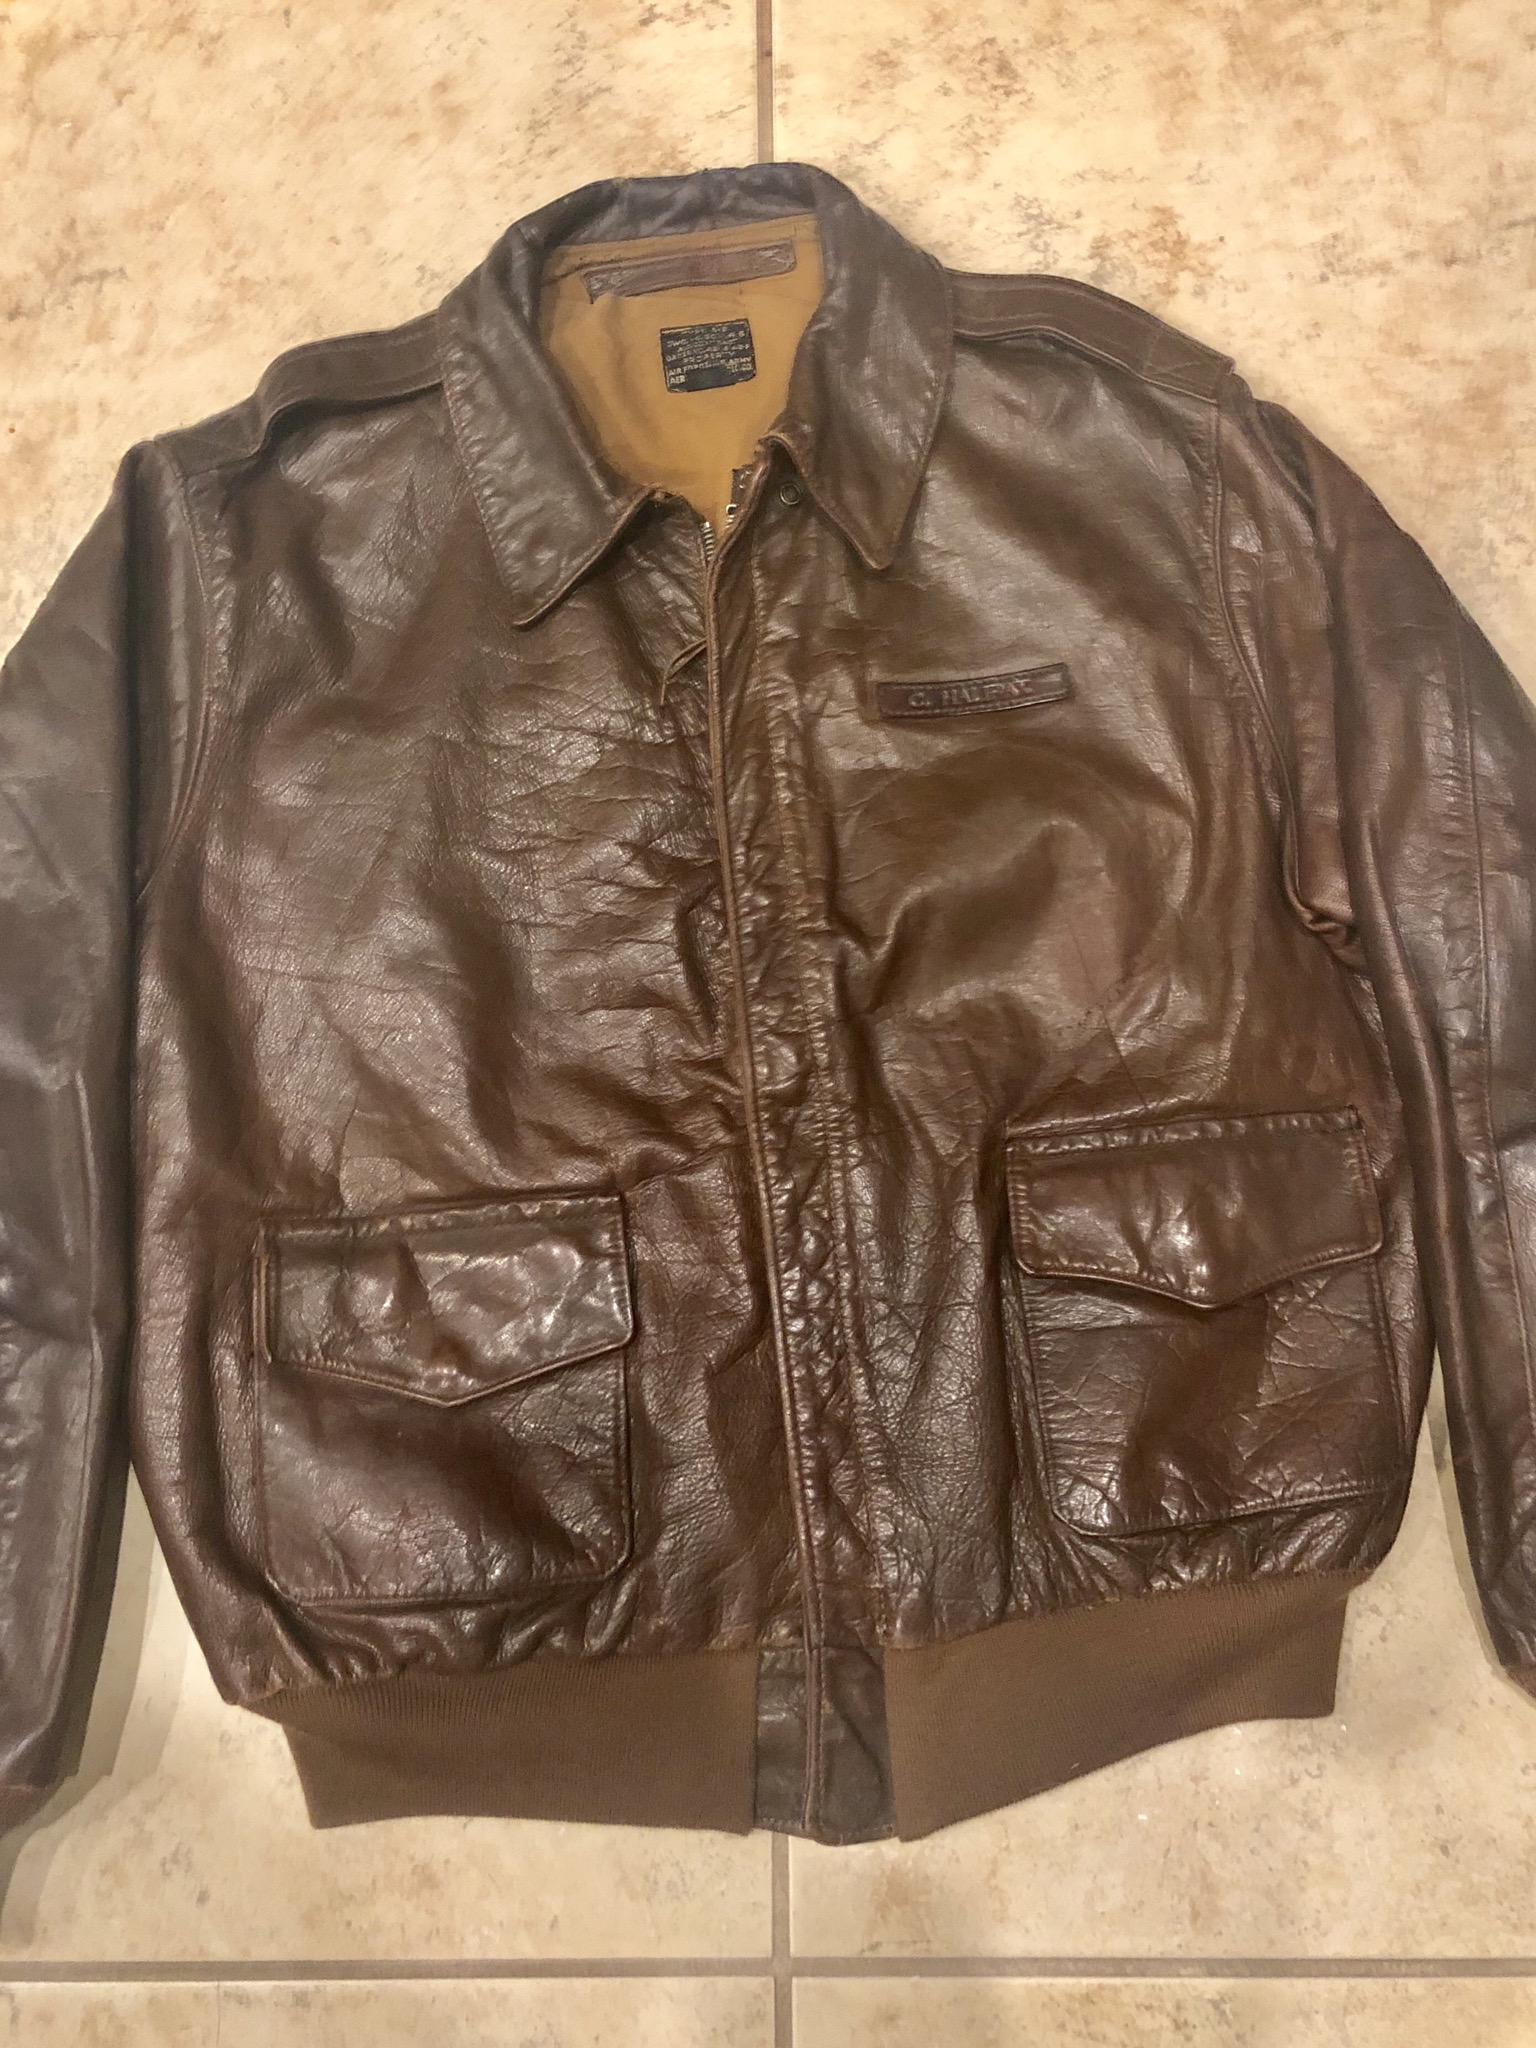 Vintage Jackets | Page 7 | Vintage Leather Jackets Forum